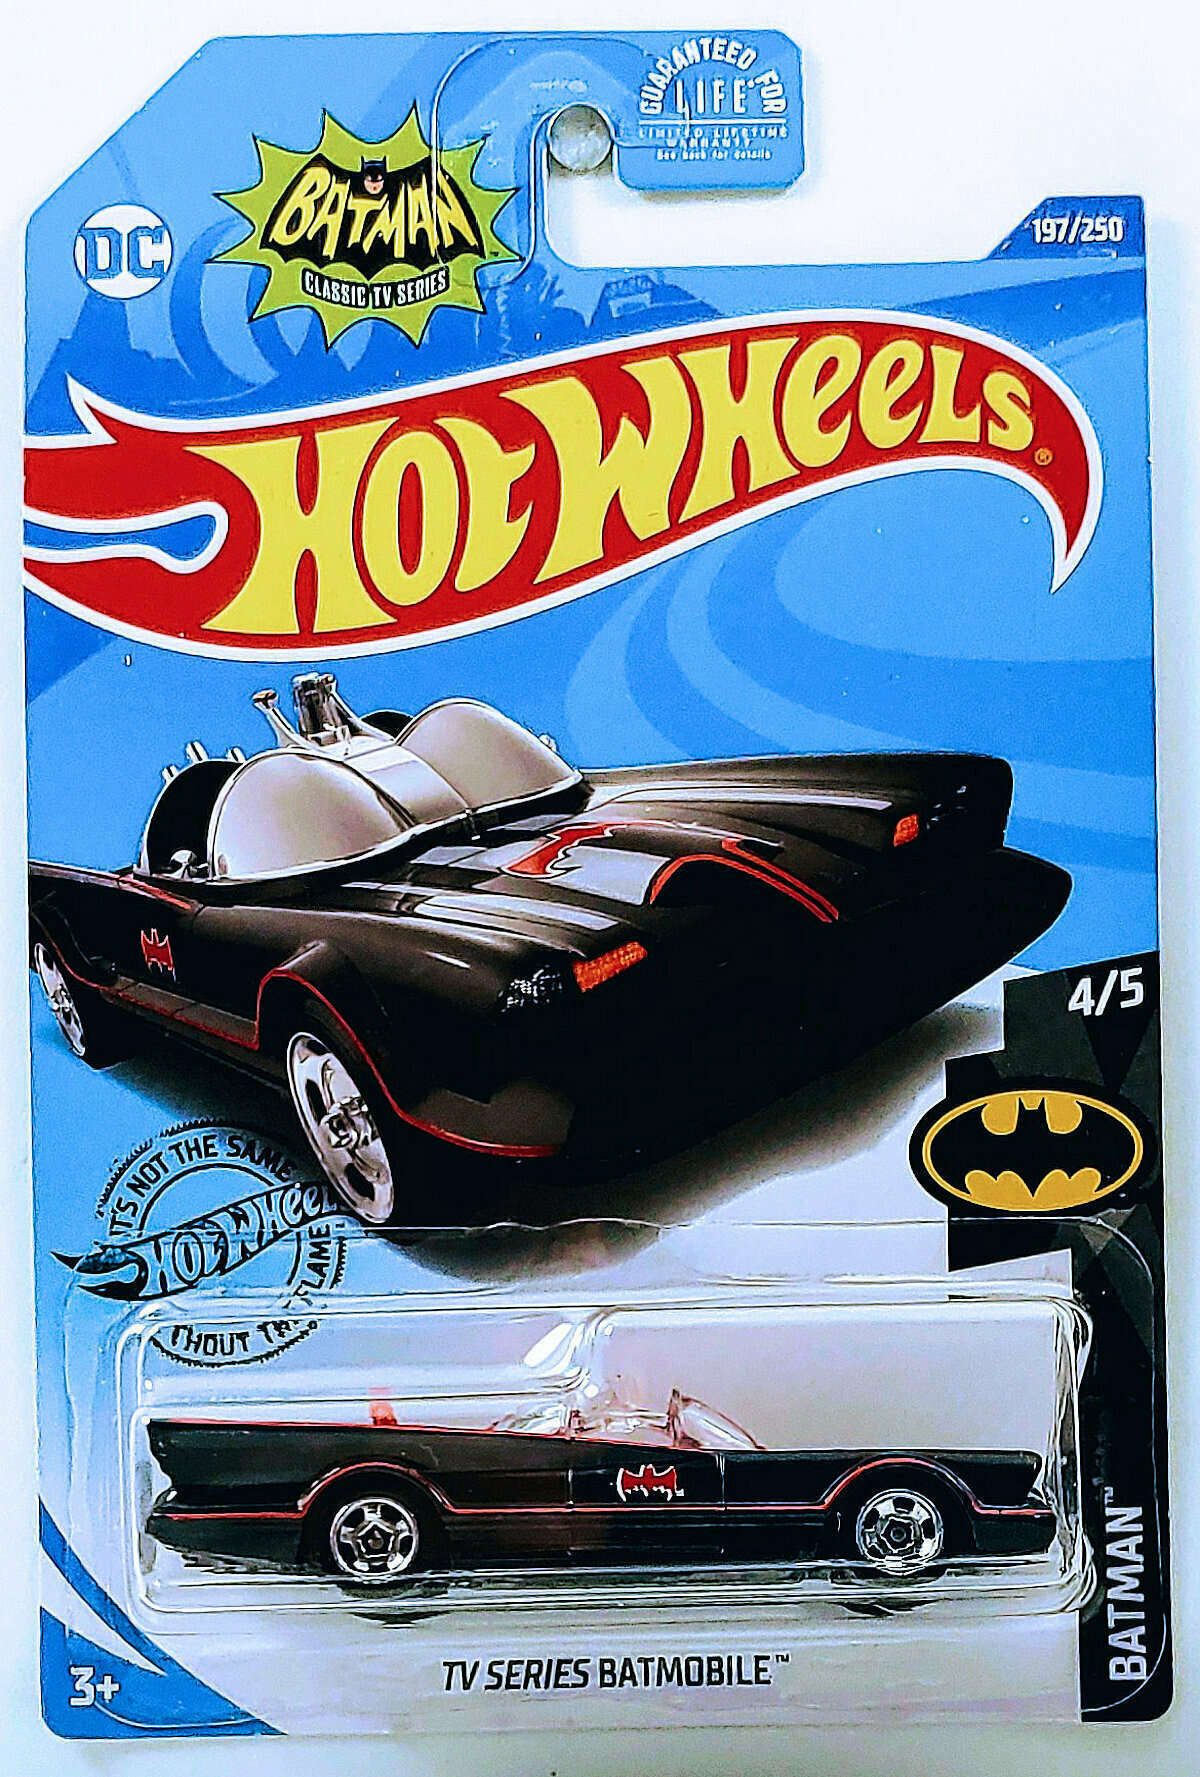 Hot Wheels 2020 - Collector # 197/250 - Batman 4/5 - TV Series Batmobile - Black - USA Card